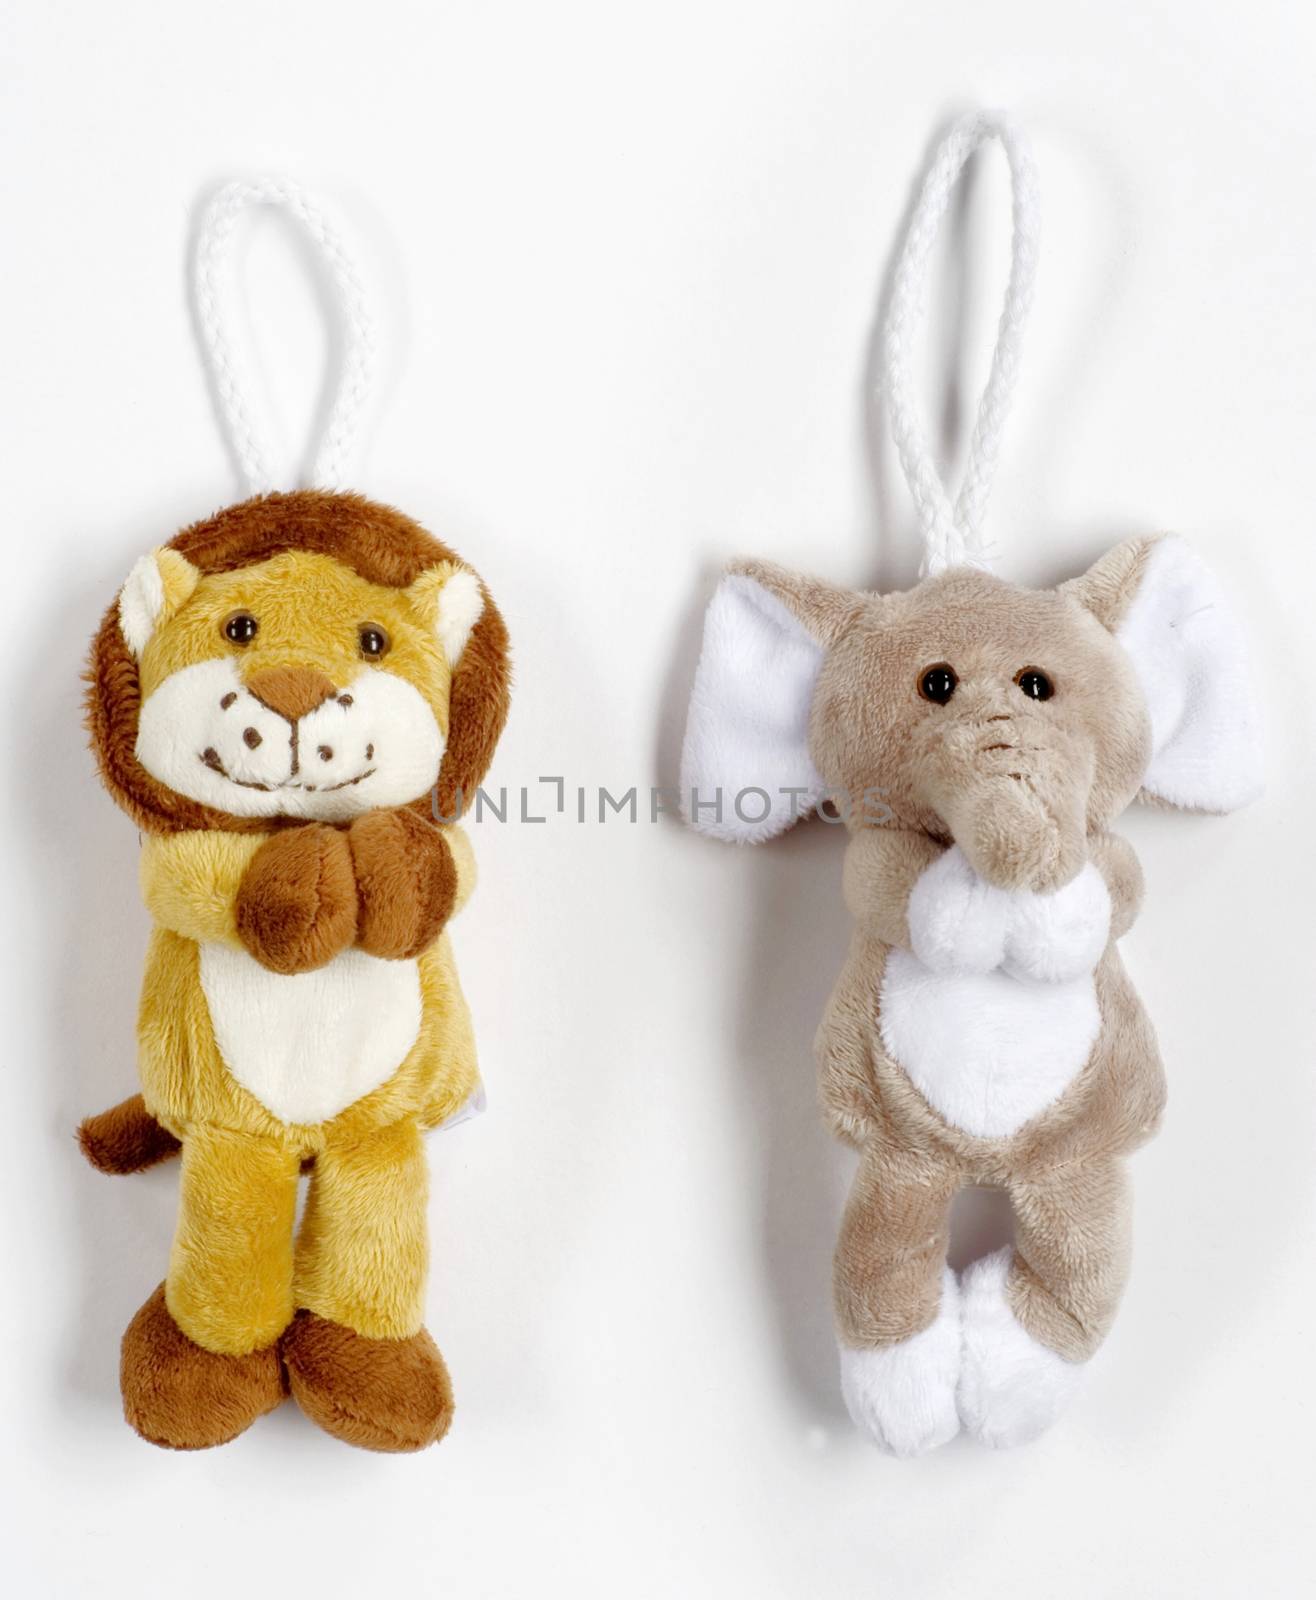 Cute plush animals - elephant and lion